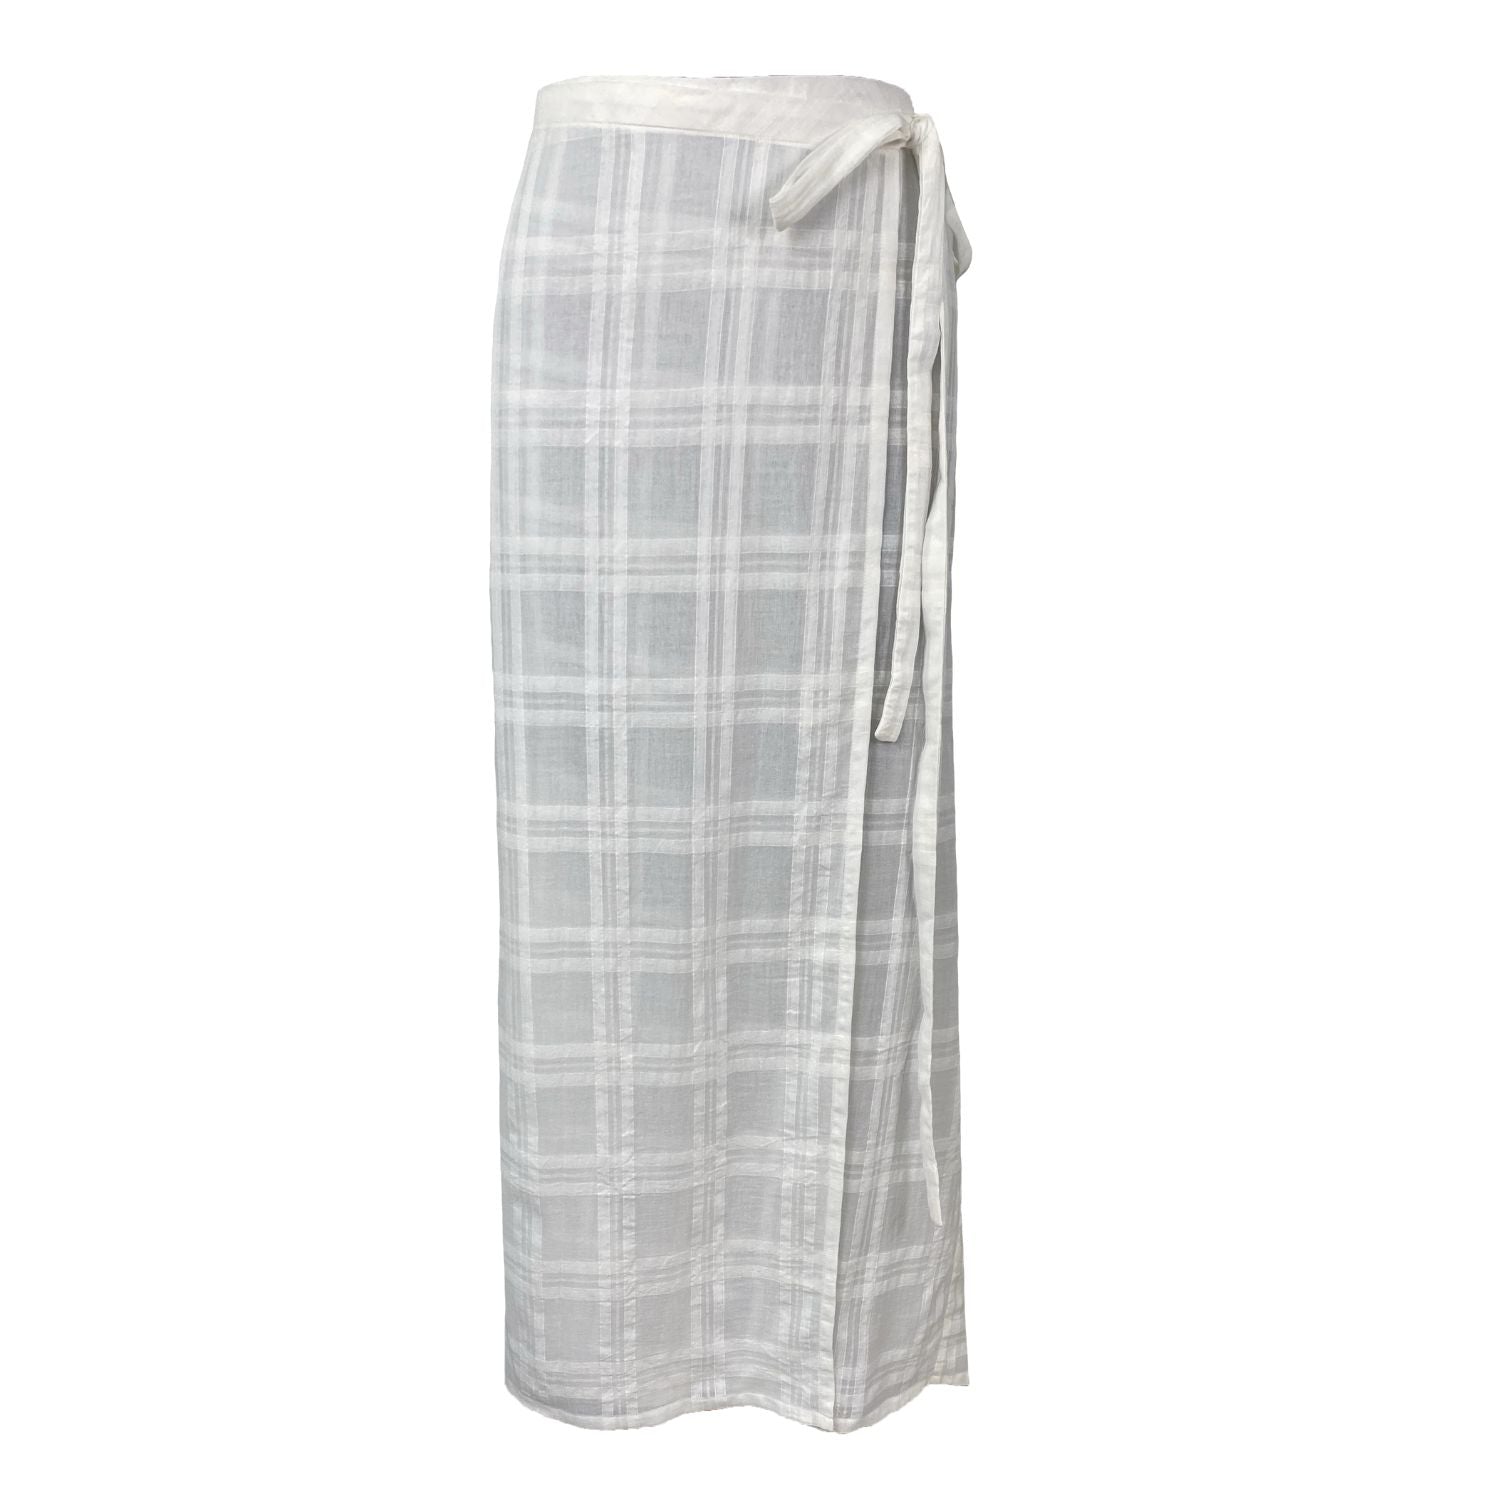 Sarong Wrap Skirt in White Windowpane